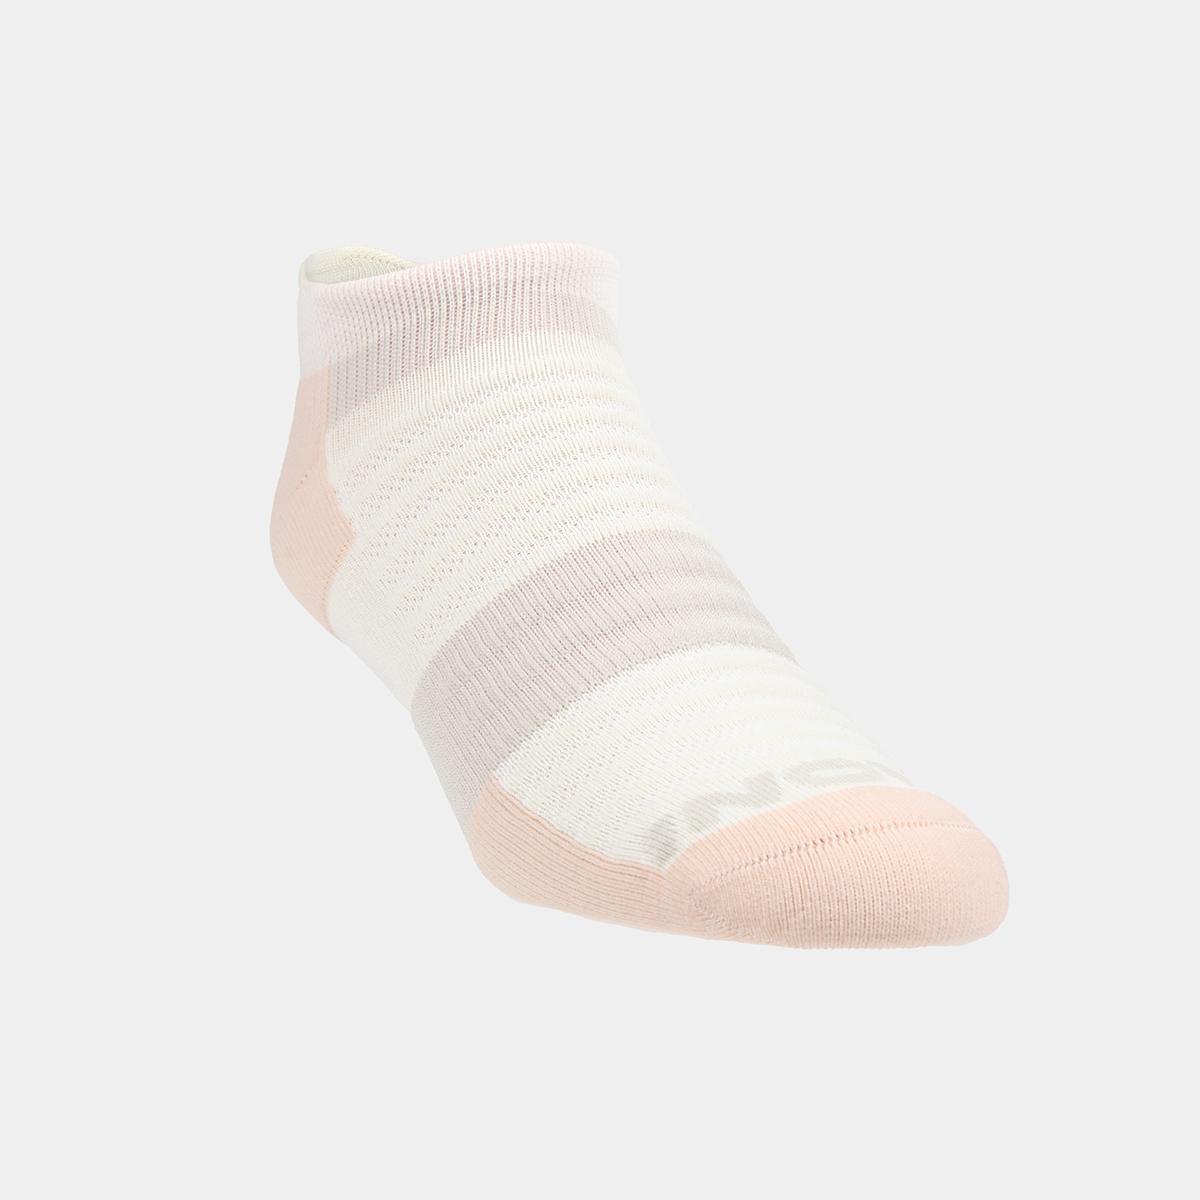 Inov-8 Active Low Socks - Ivory / Rose